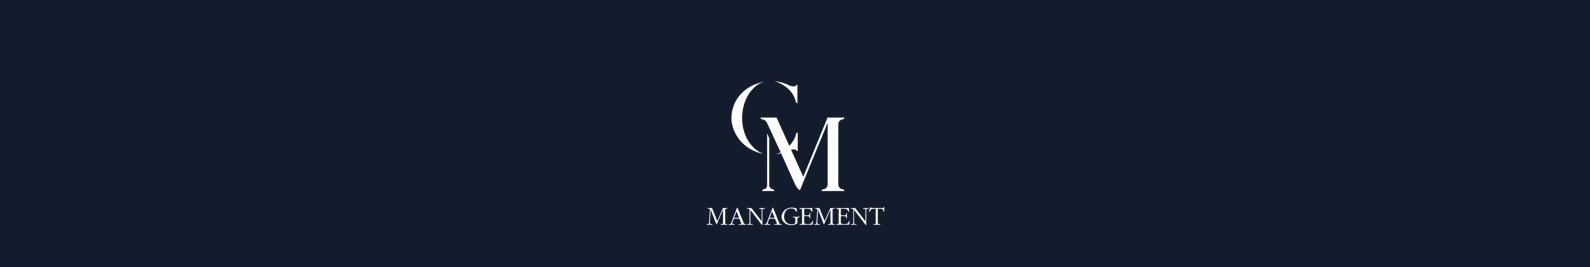 cm management background